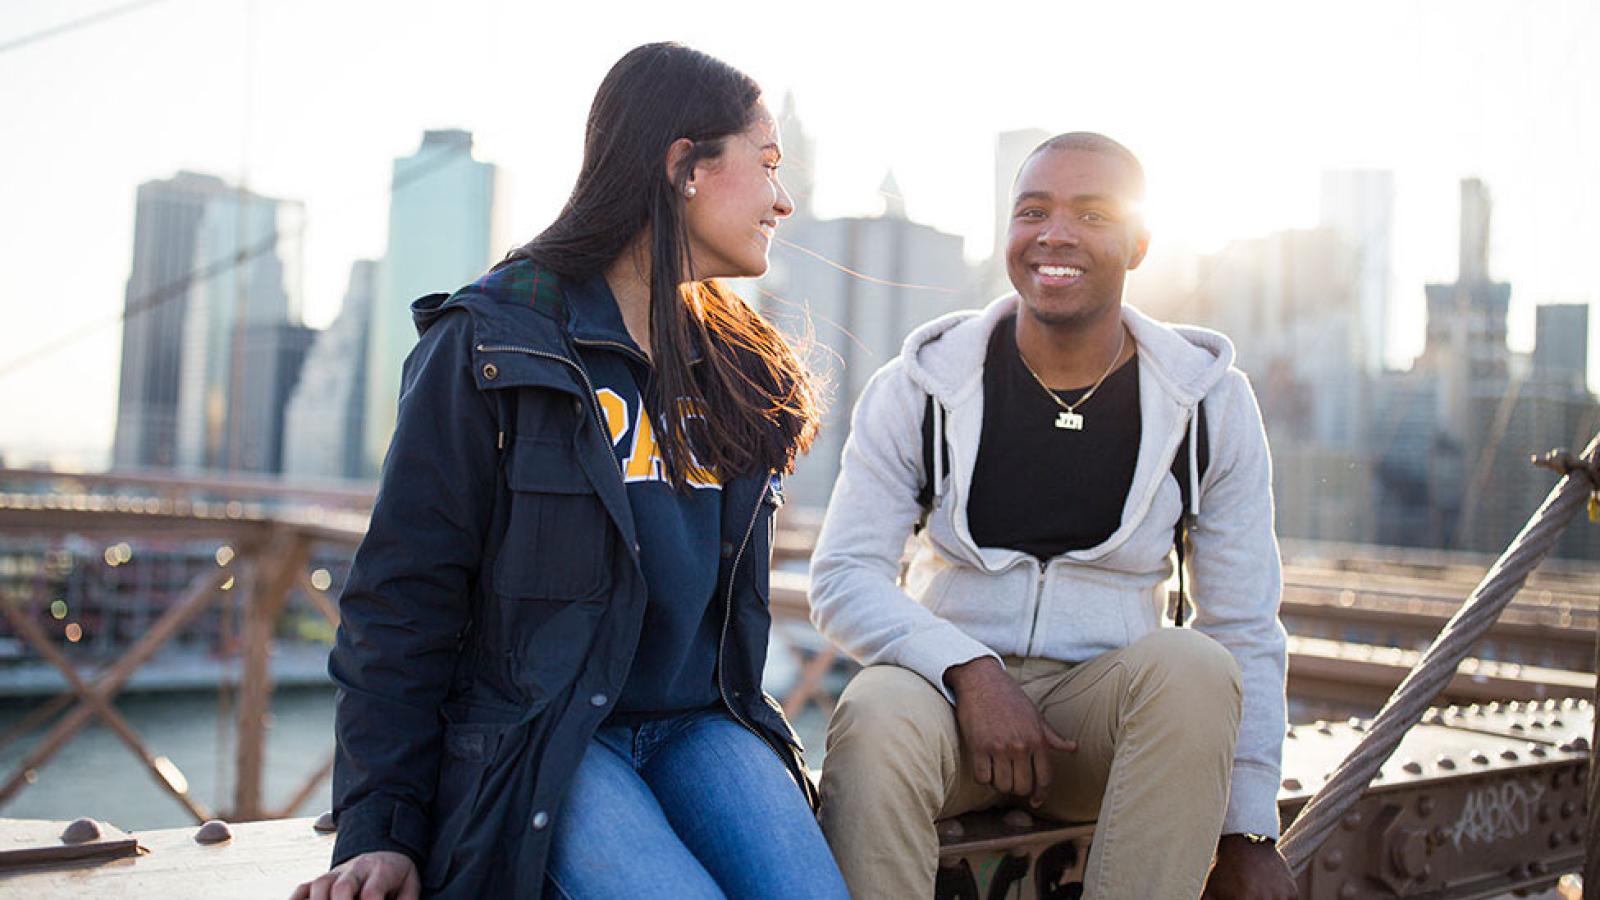 Students sitting on the Brooklyn Bridge.